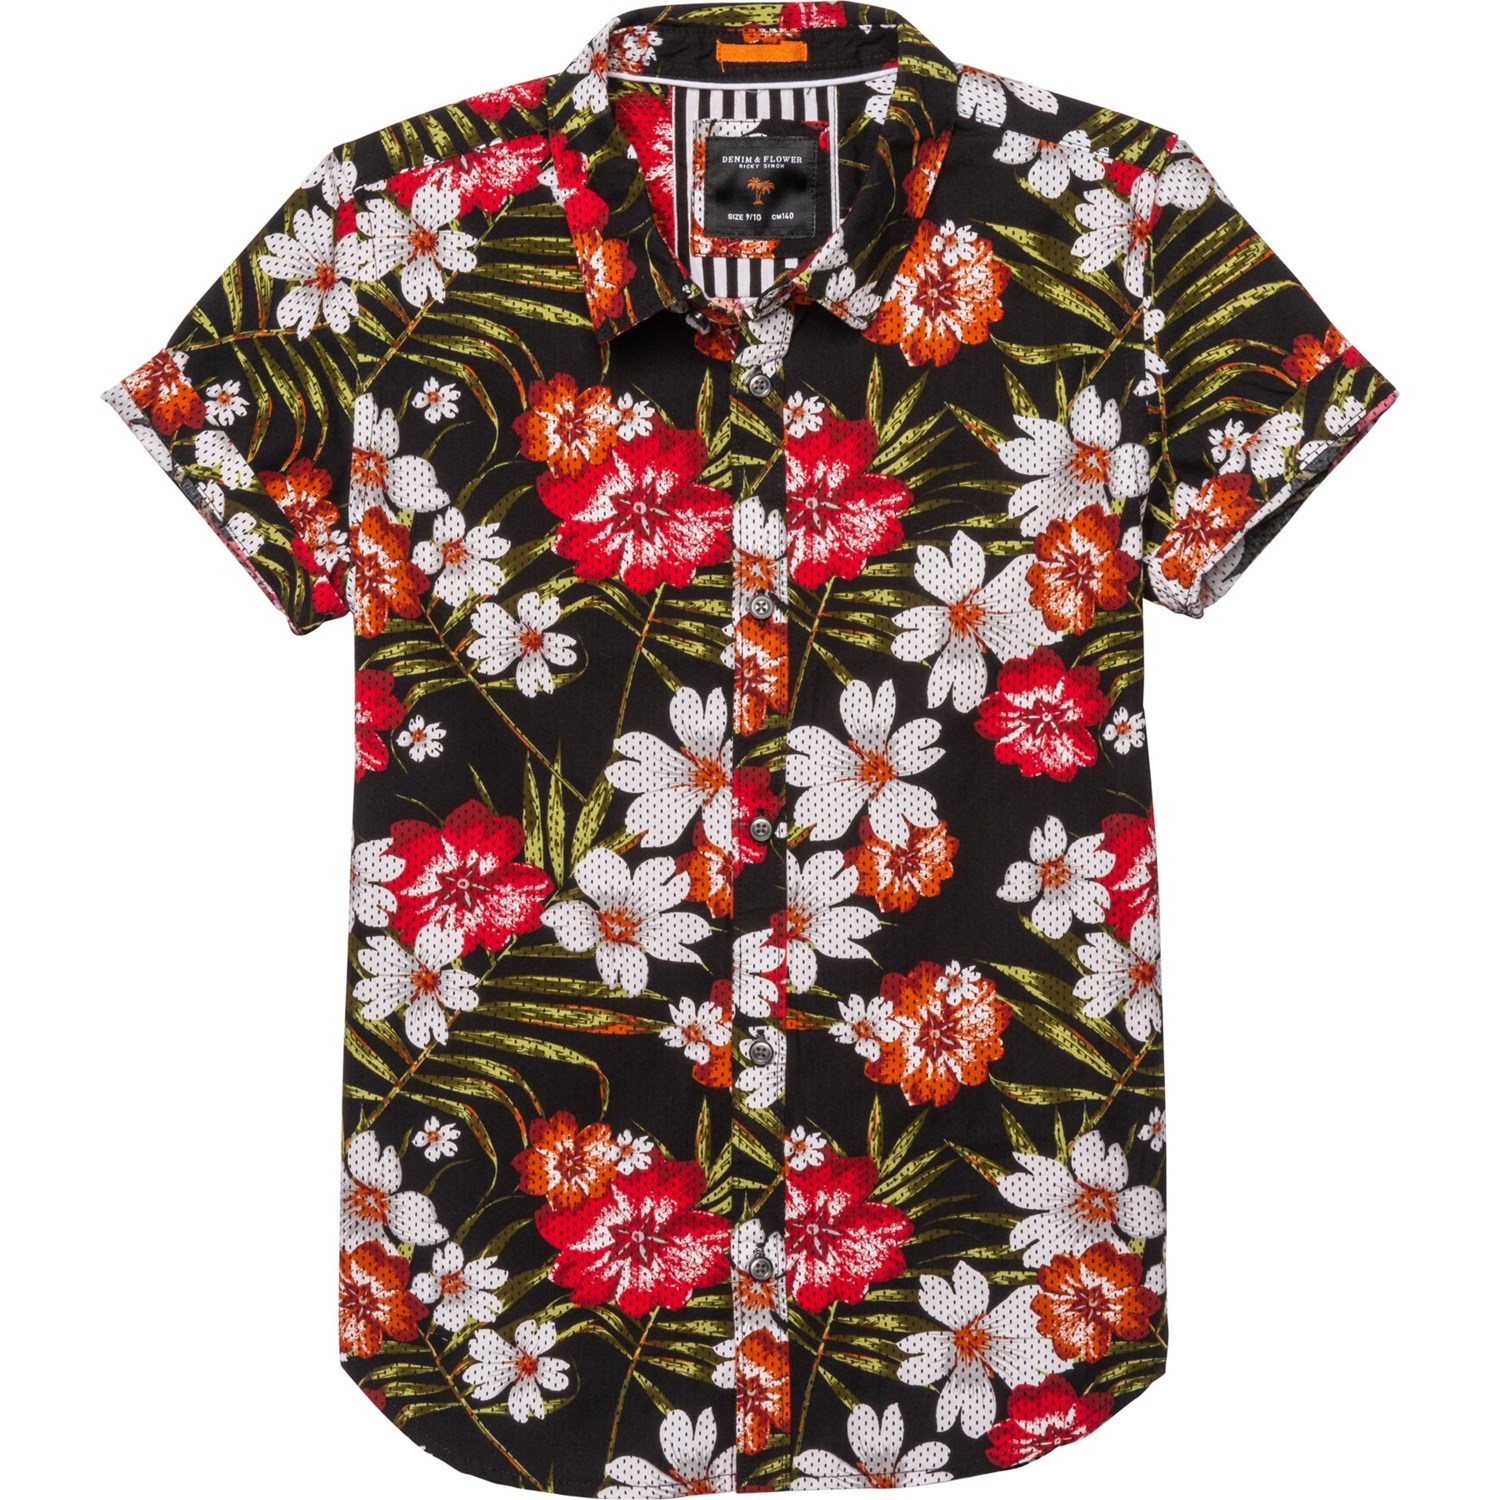 DENIM & FLOWER Floral Button-Up T-Shirt (For Big Boys) - Save 44%